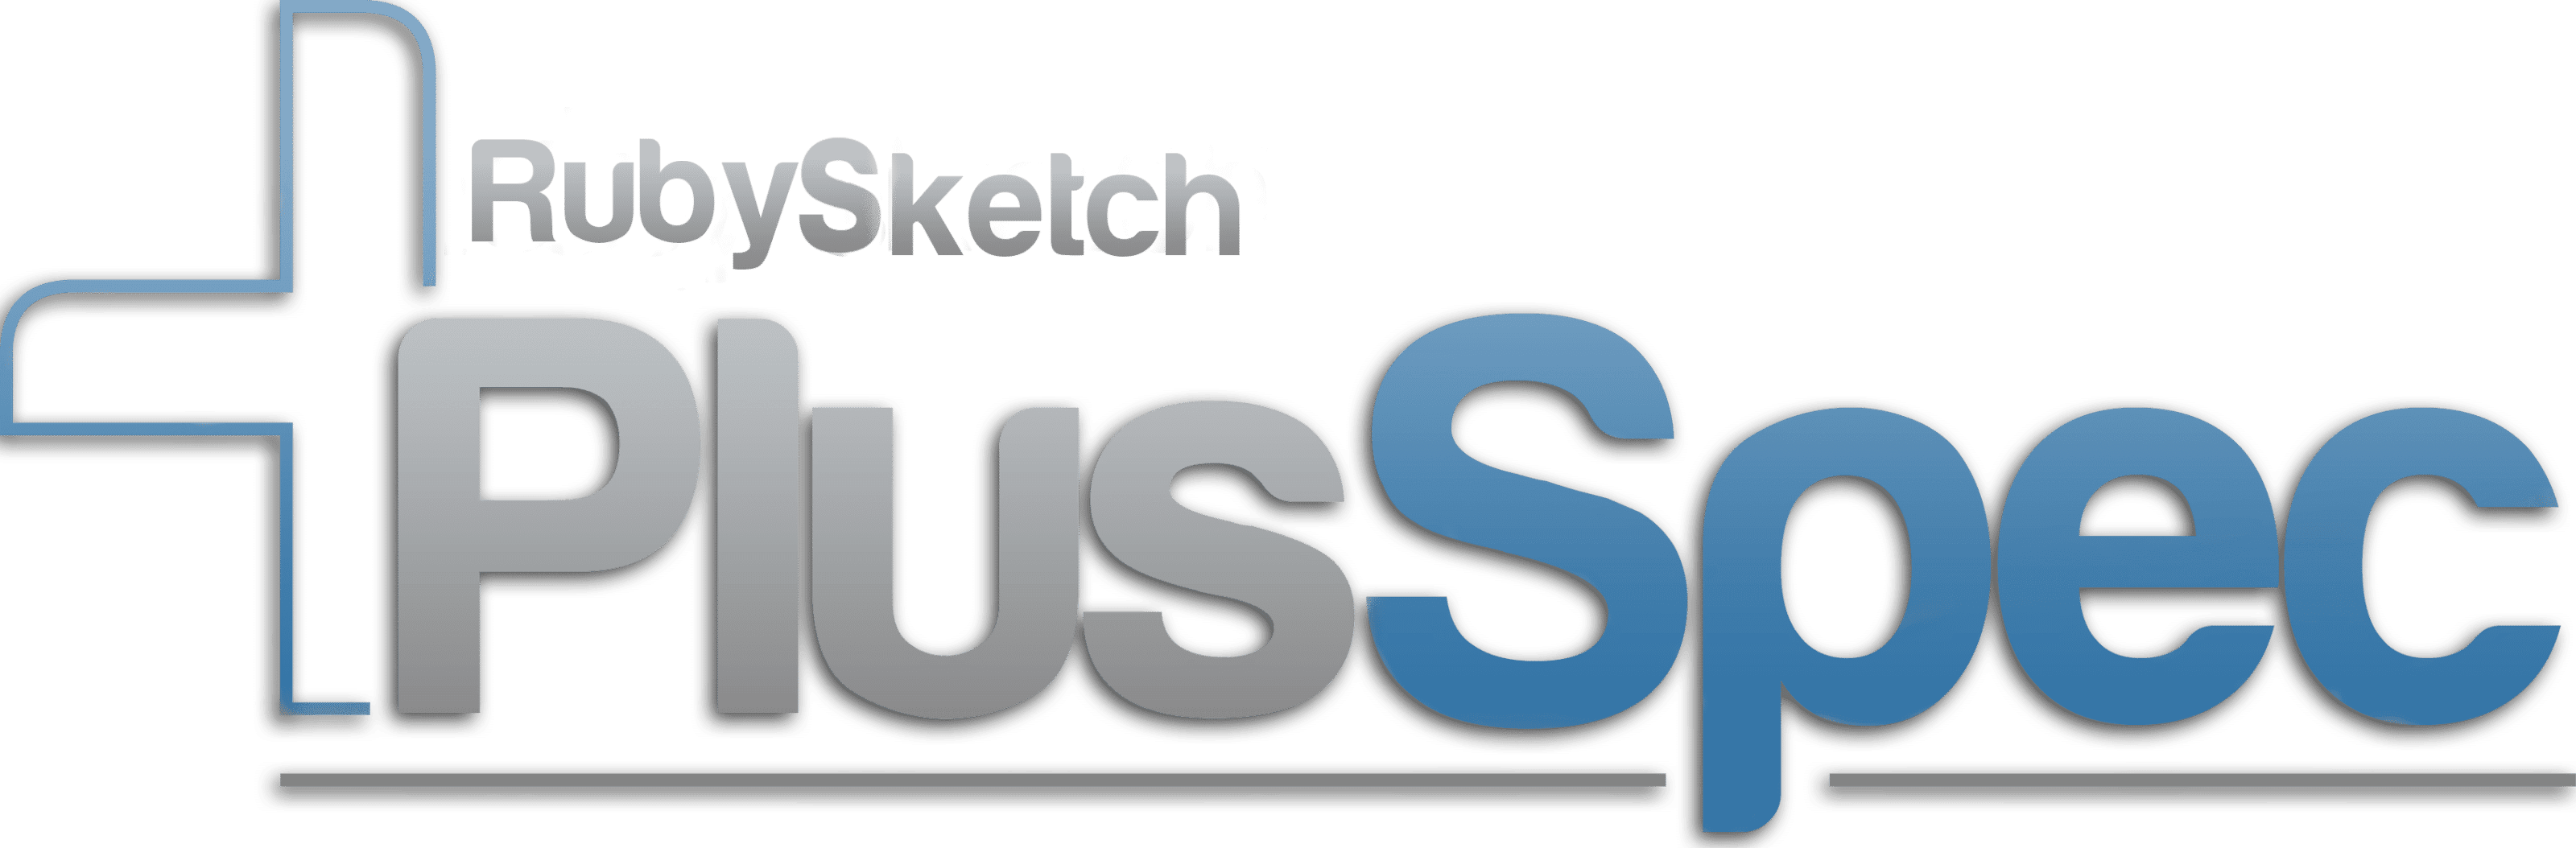 rubysketch plusspec logo